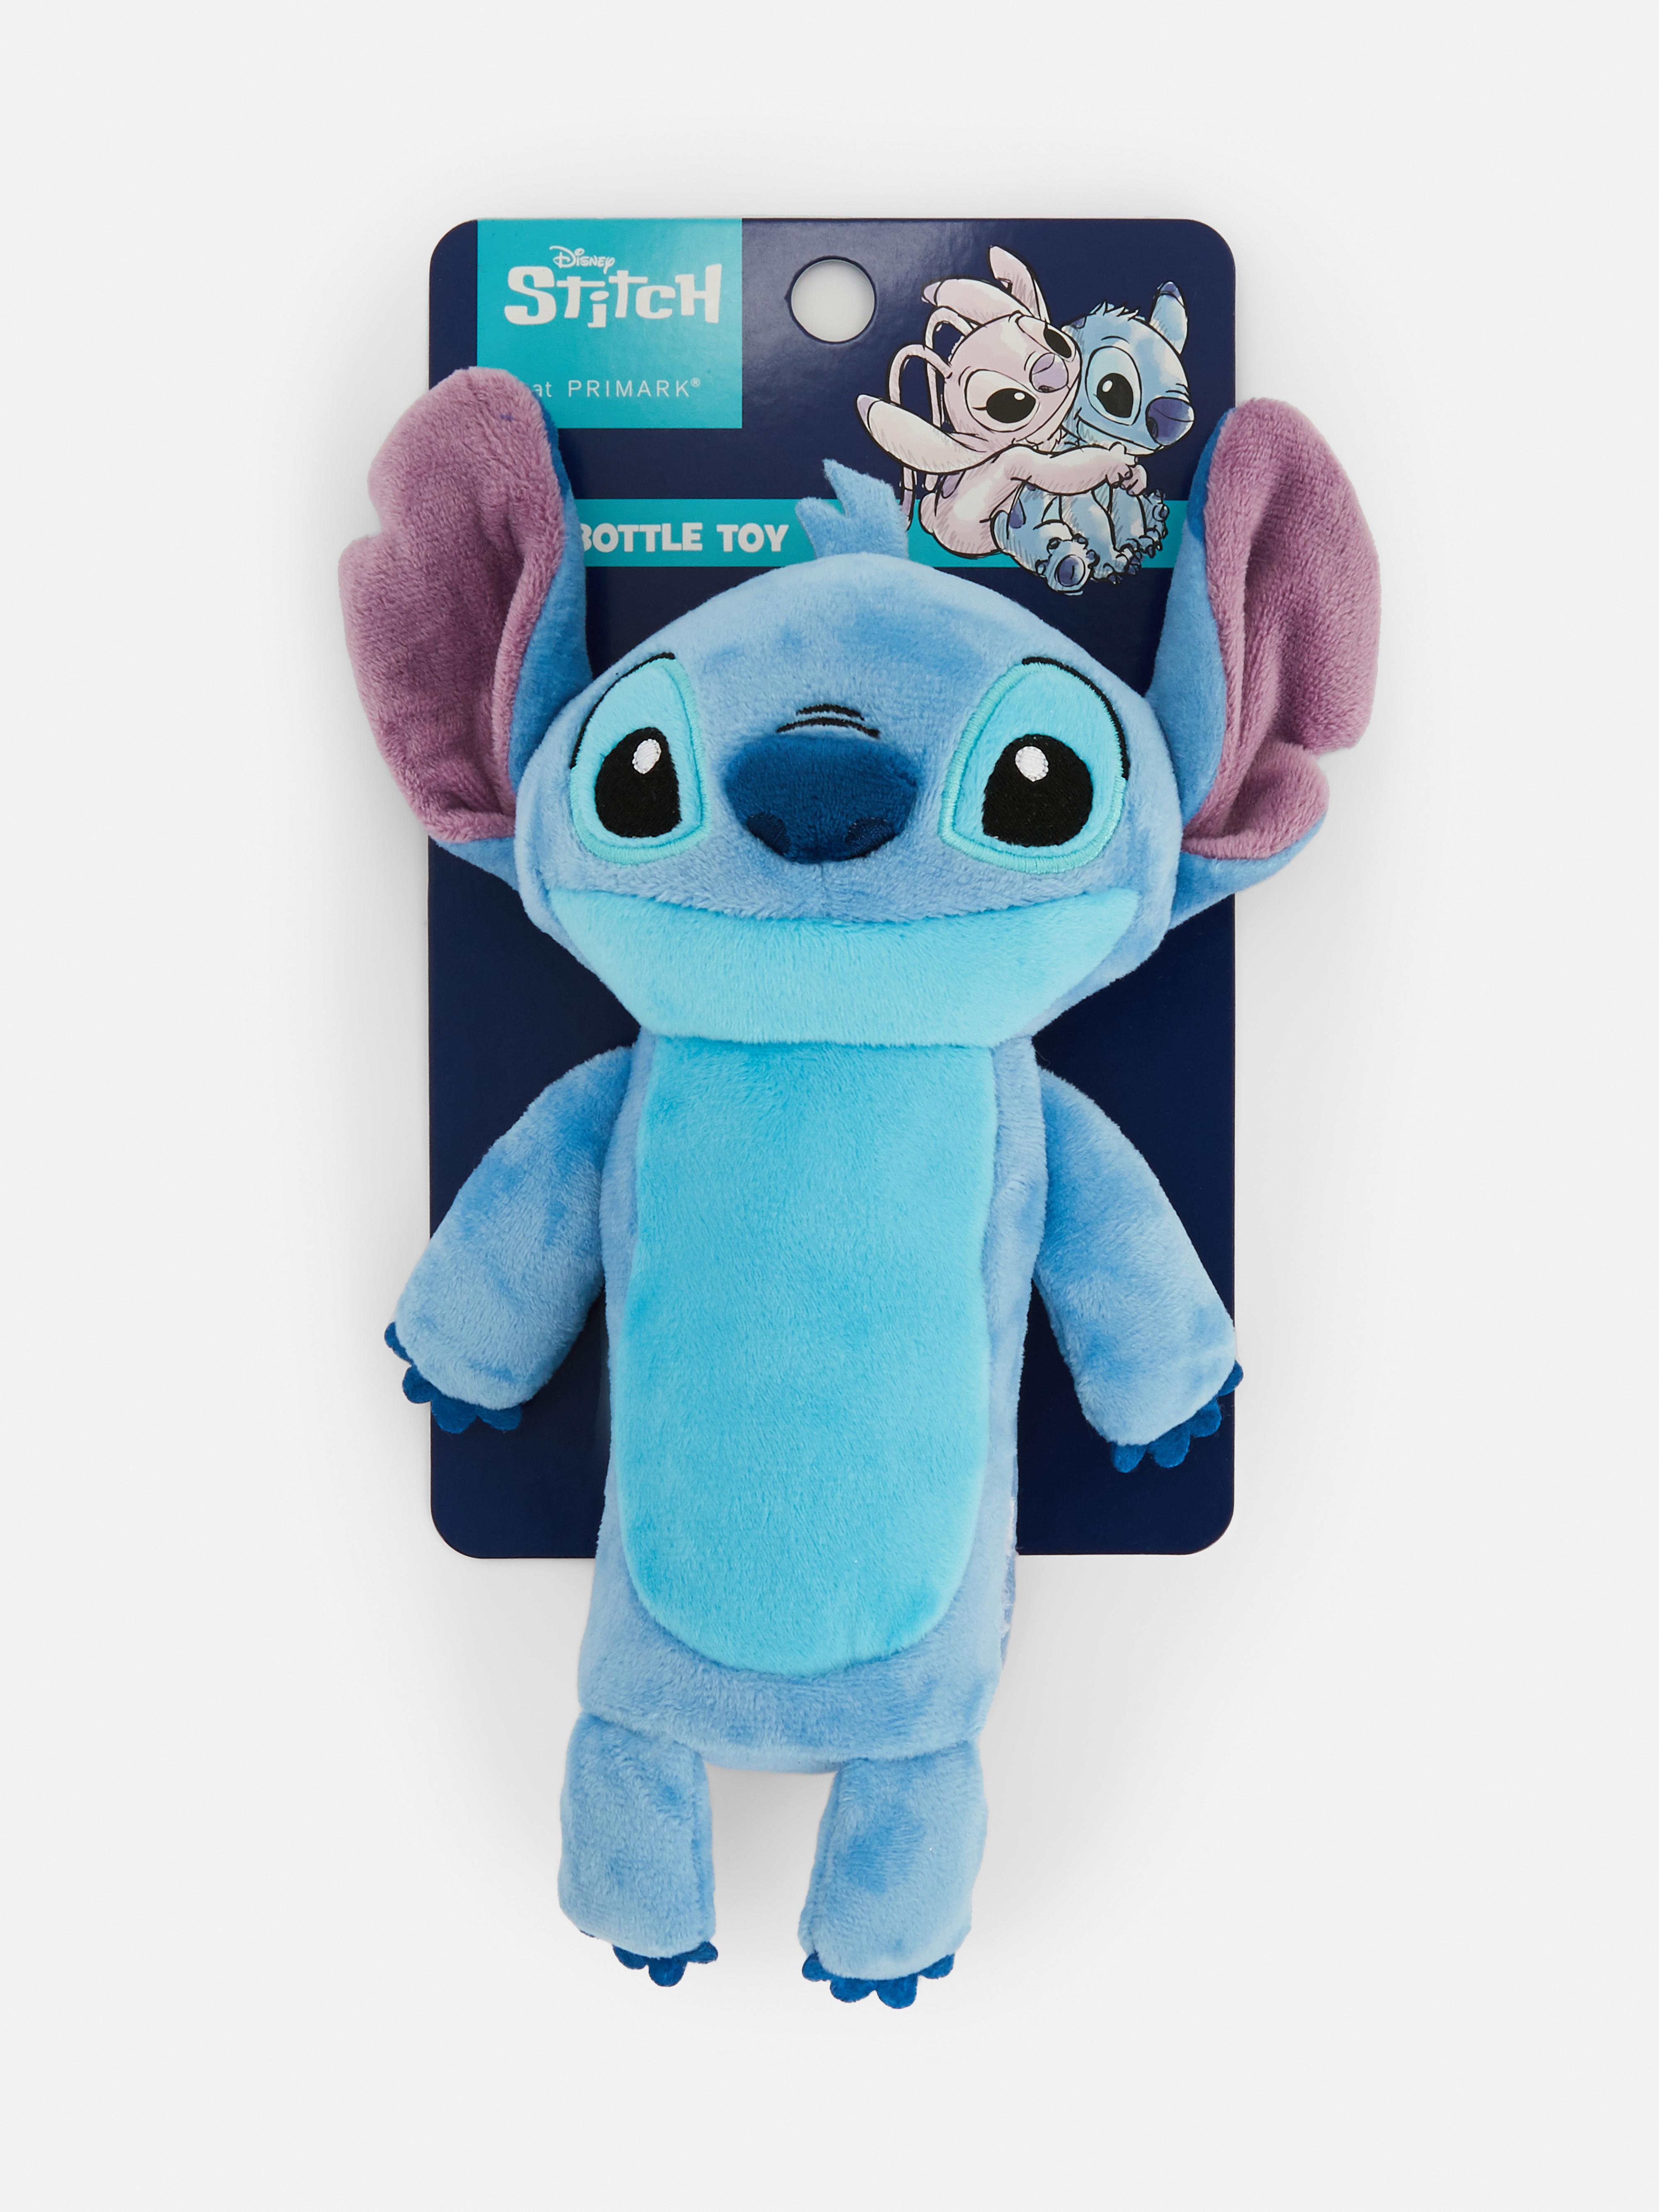 Disney’s Lilo & Stitch Bottle Toy